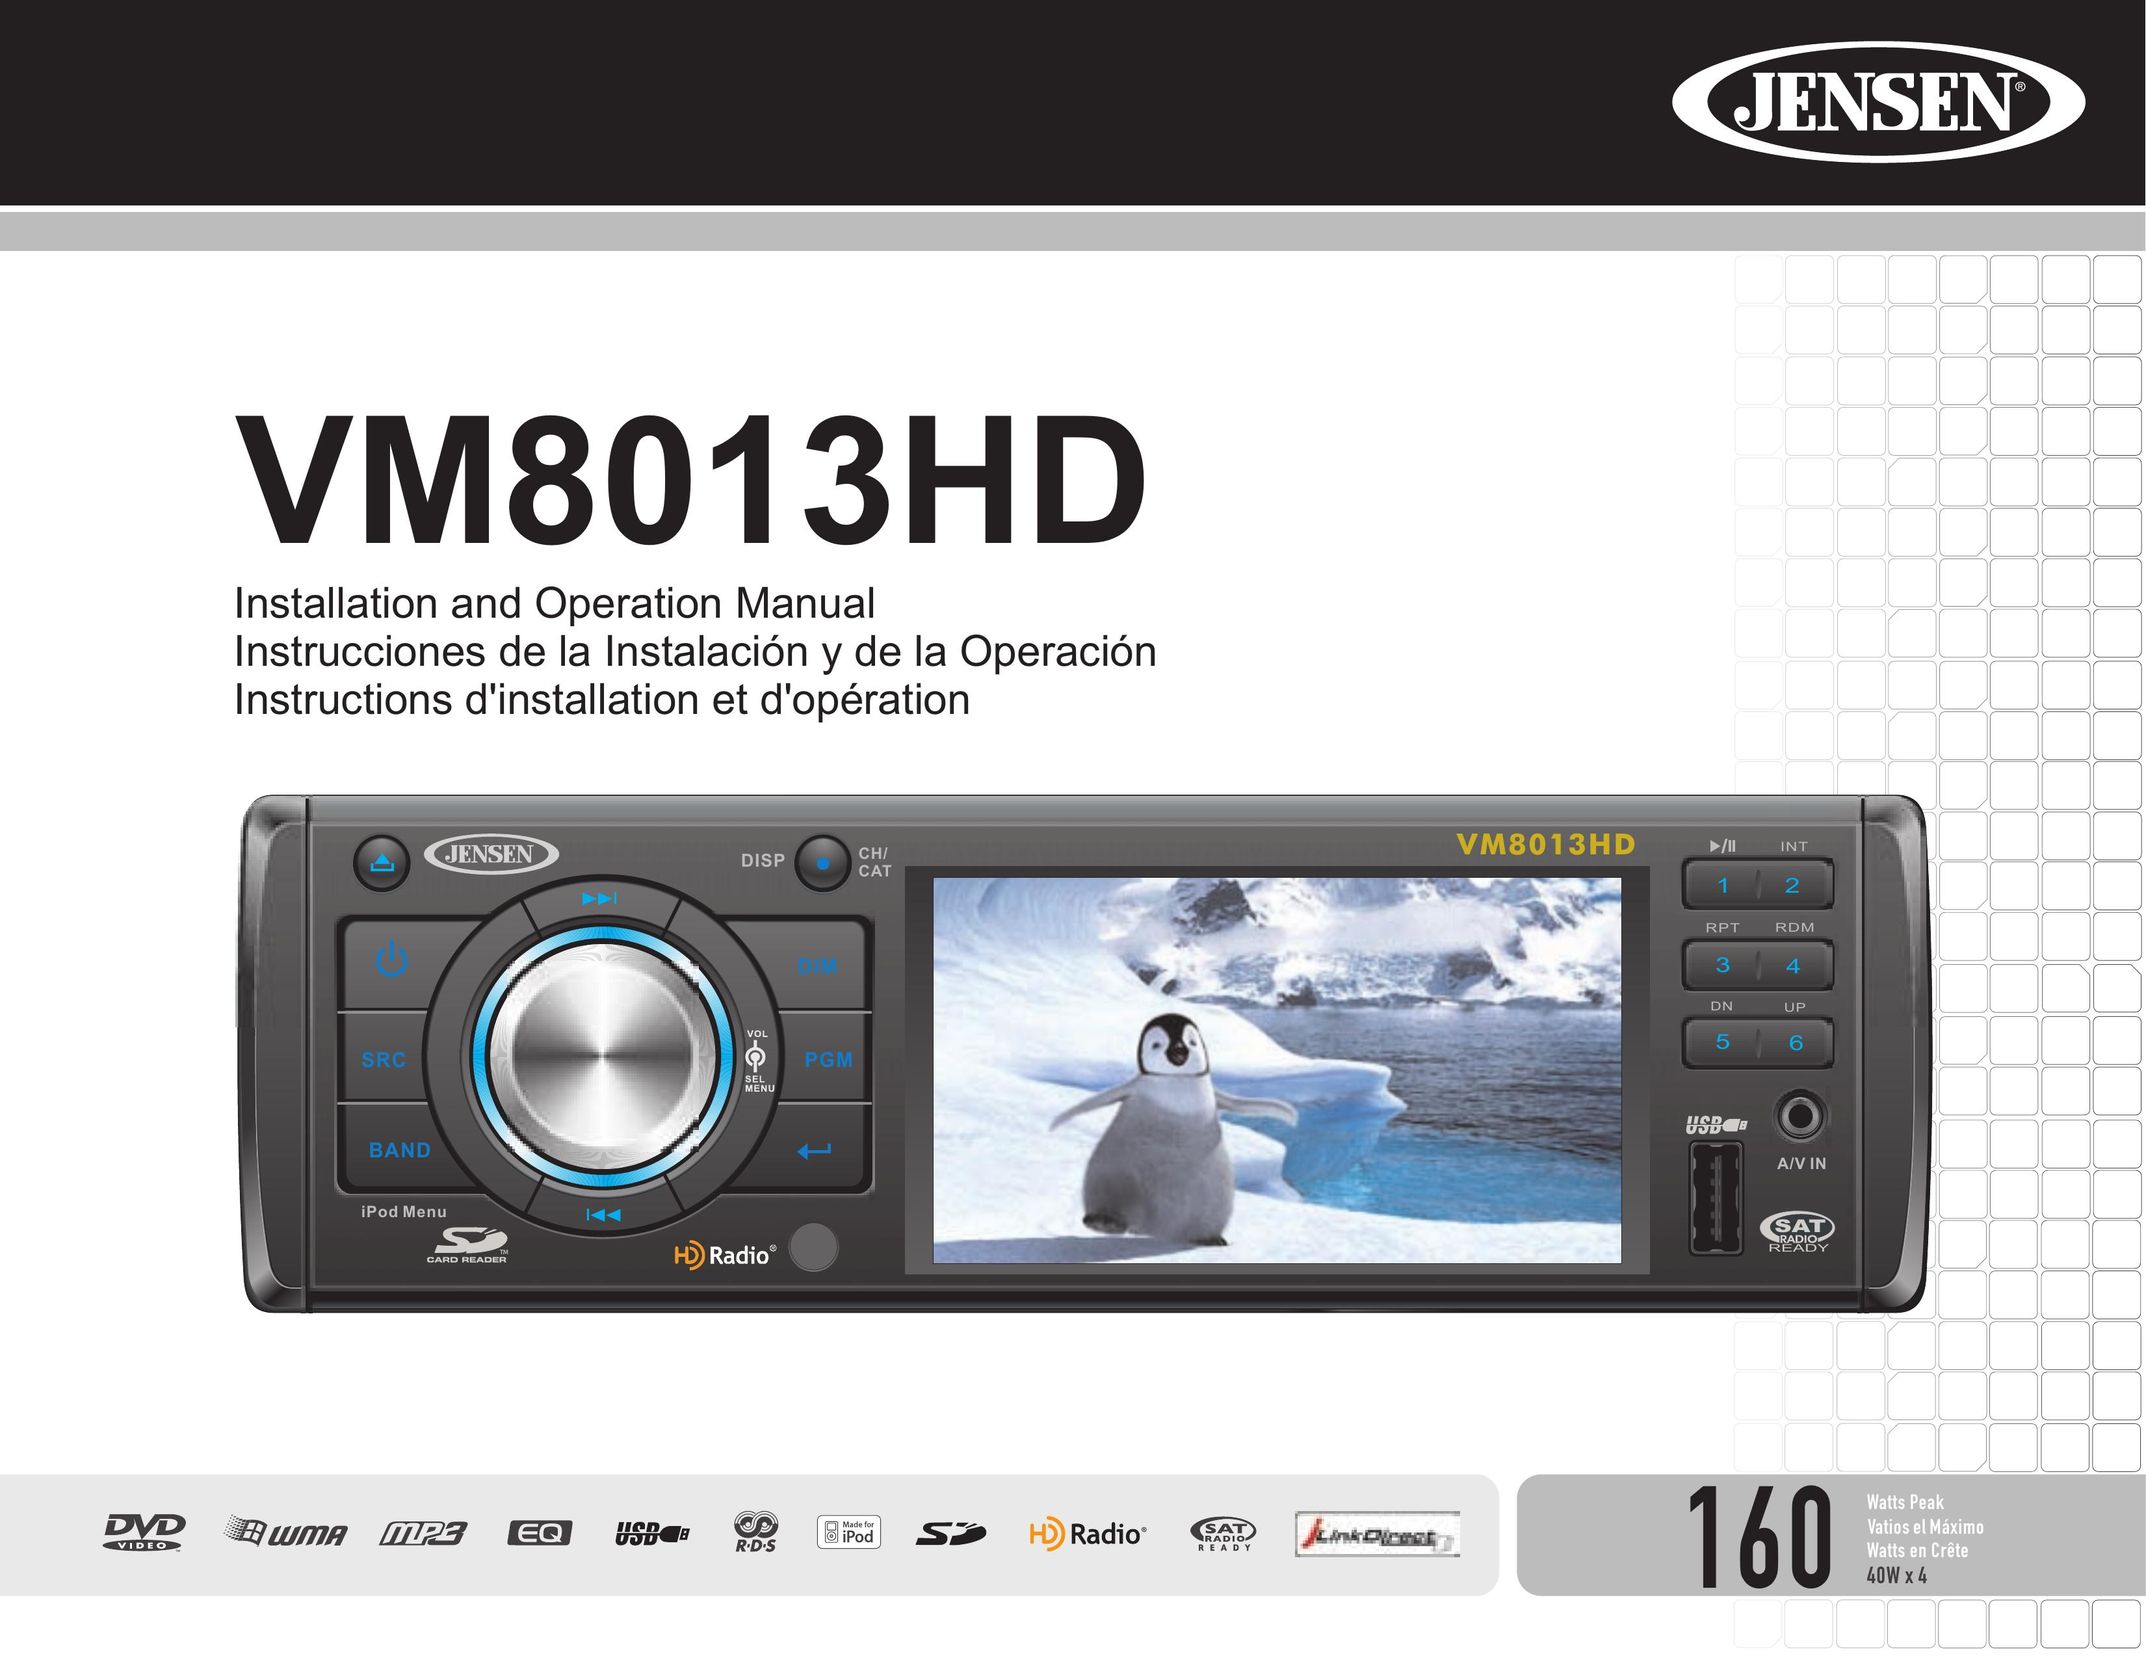 Jensen VM8013HD Car Video System User Manual